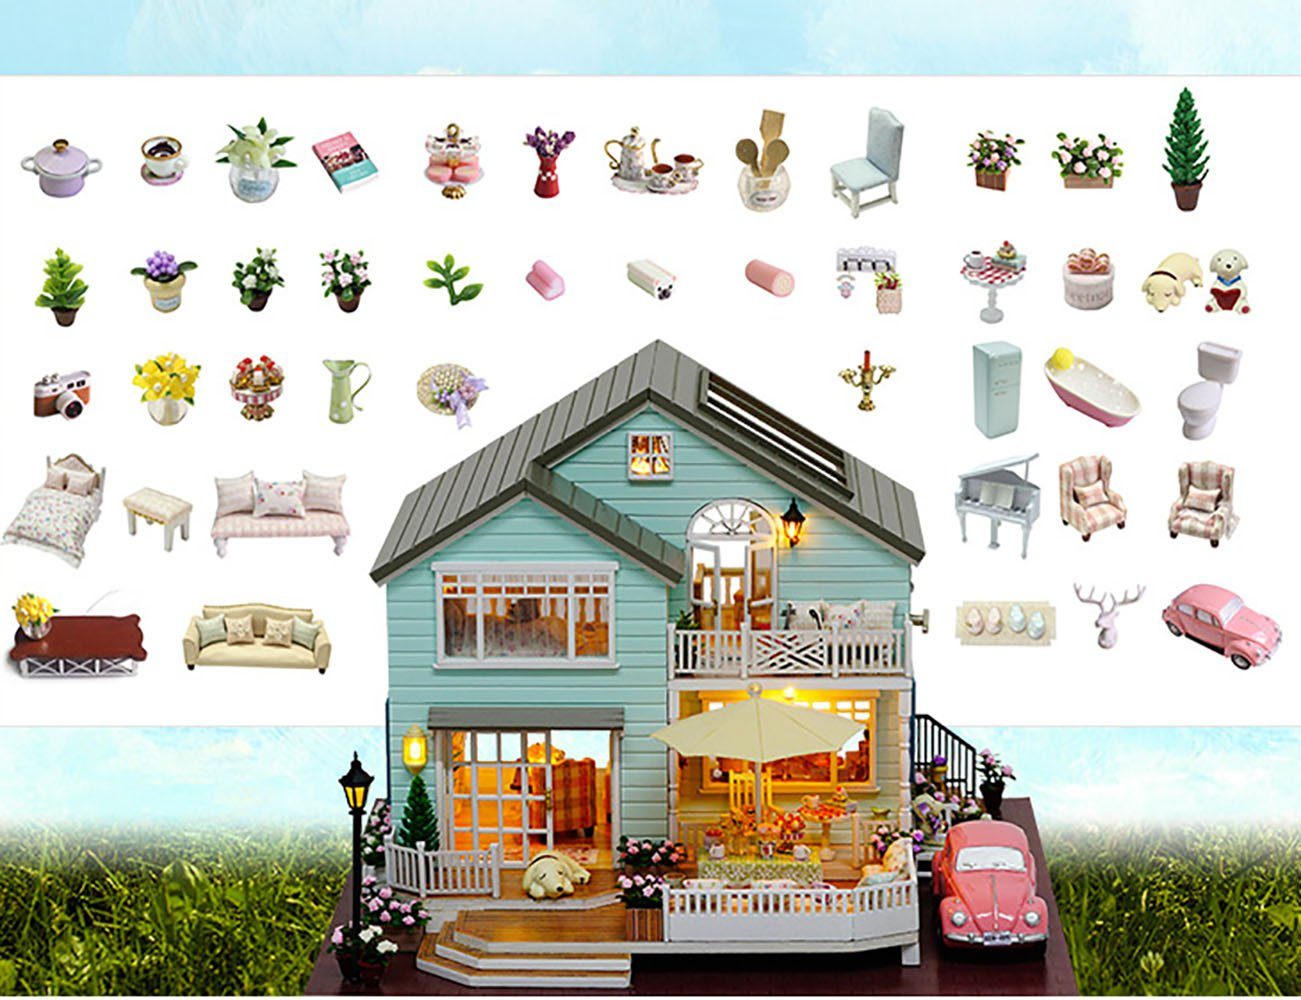 Cute Room 3D-Puzzle DIY holz Maßstab zum Queenstown, 3D-Puzzle, 1:32, Miniaturhaus, Puppenhaus basteln Haus Puzzleteile, Modellbausatz Miniature